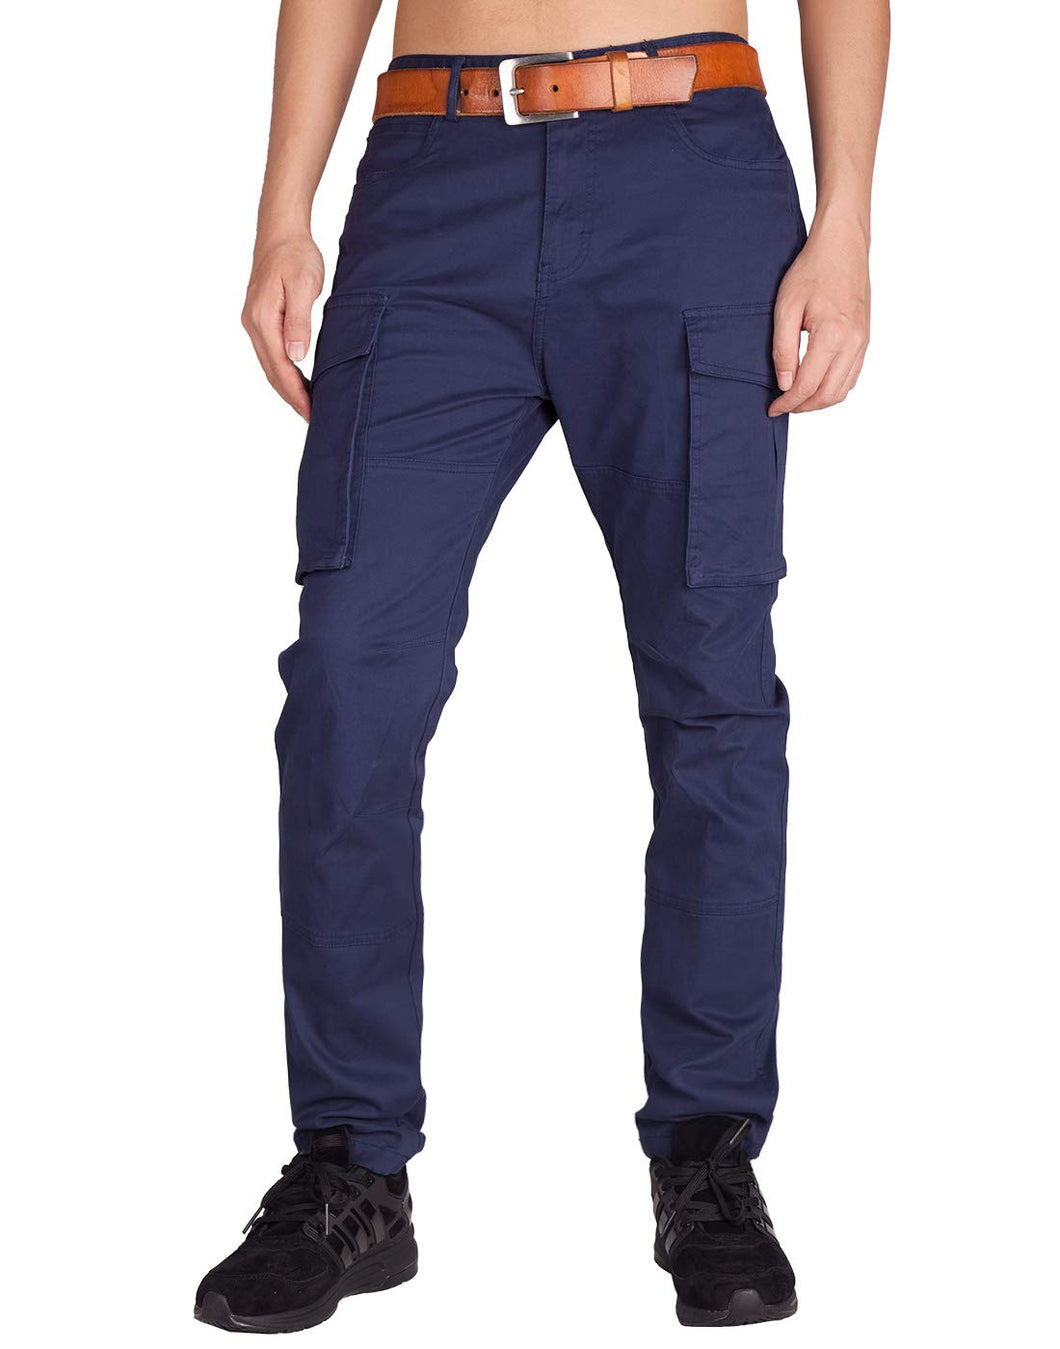 Men's Navy Blue Cargo Flat Pants